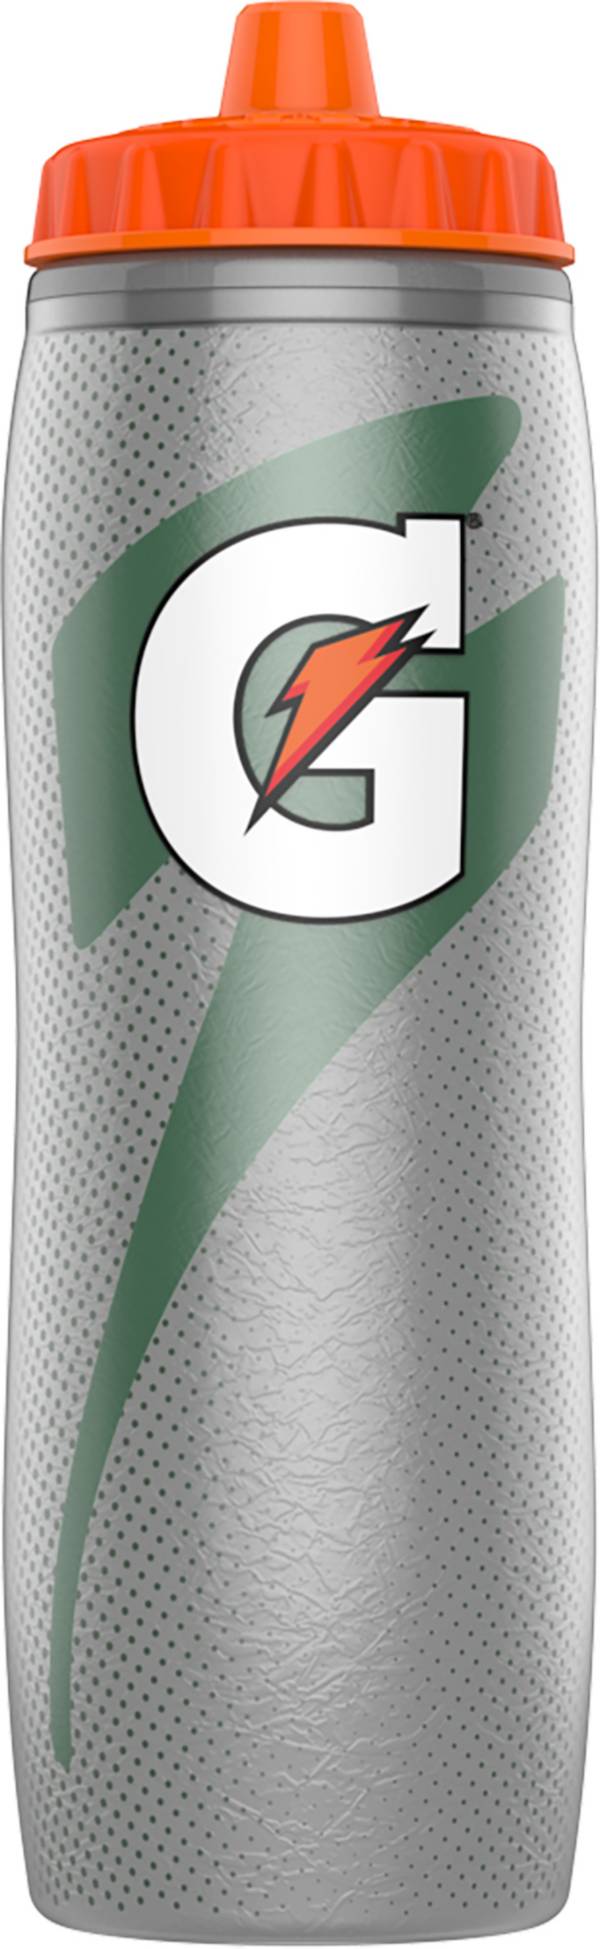 Gatorade 30 oz Insulated Squeeze Bottle product image